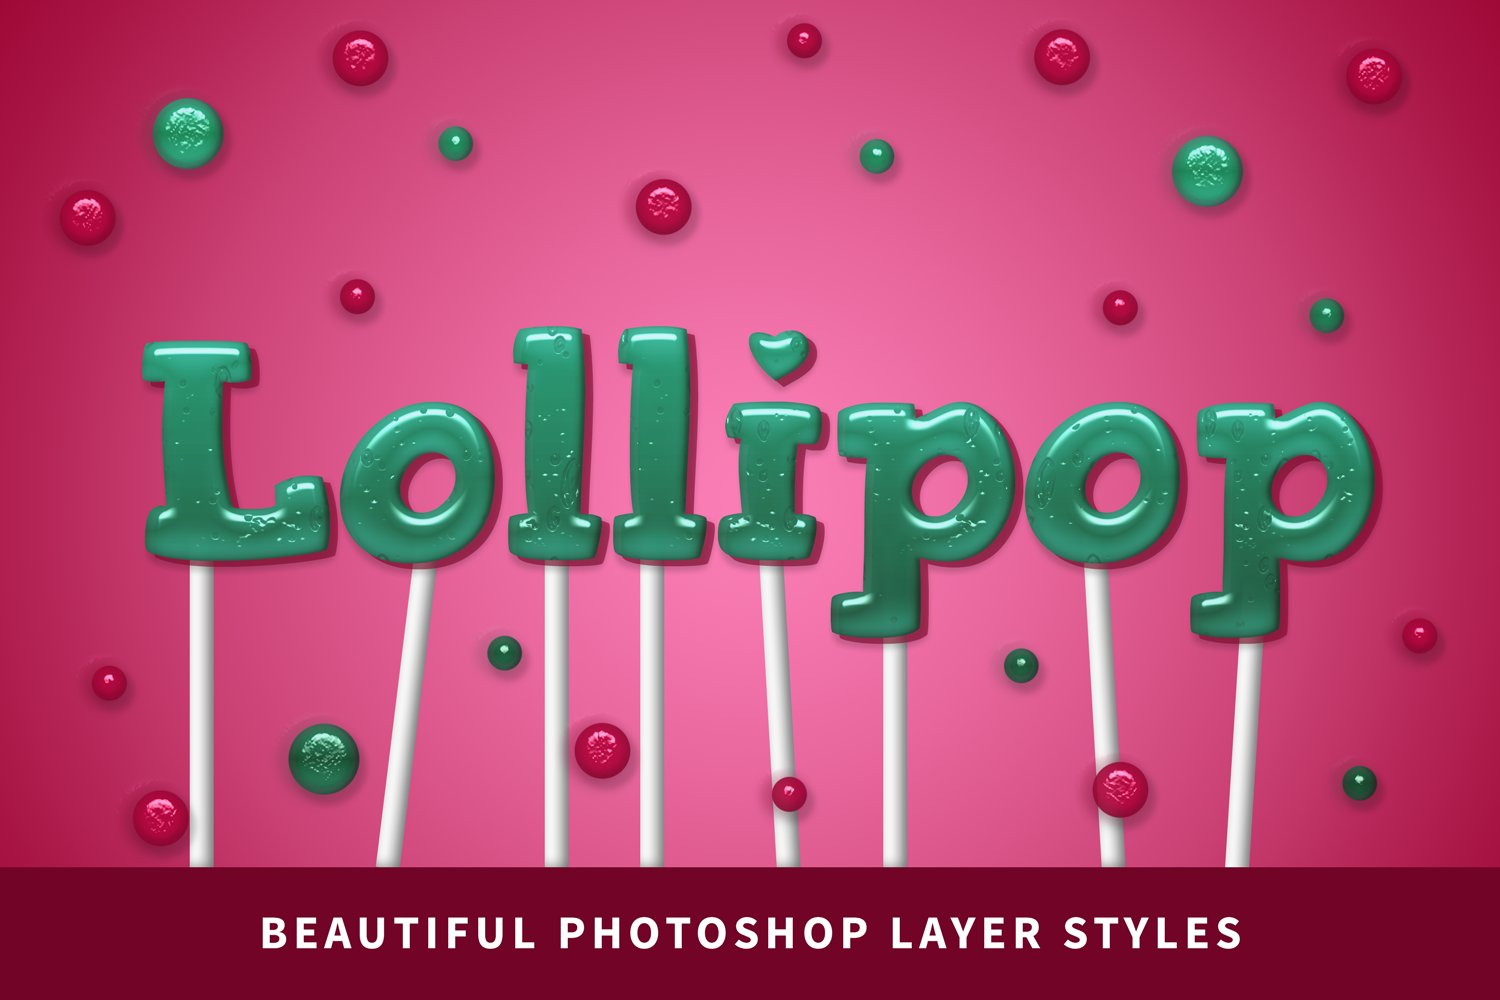 Lollipop | Photoshop Layer Stylescover image.